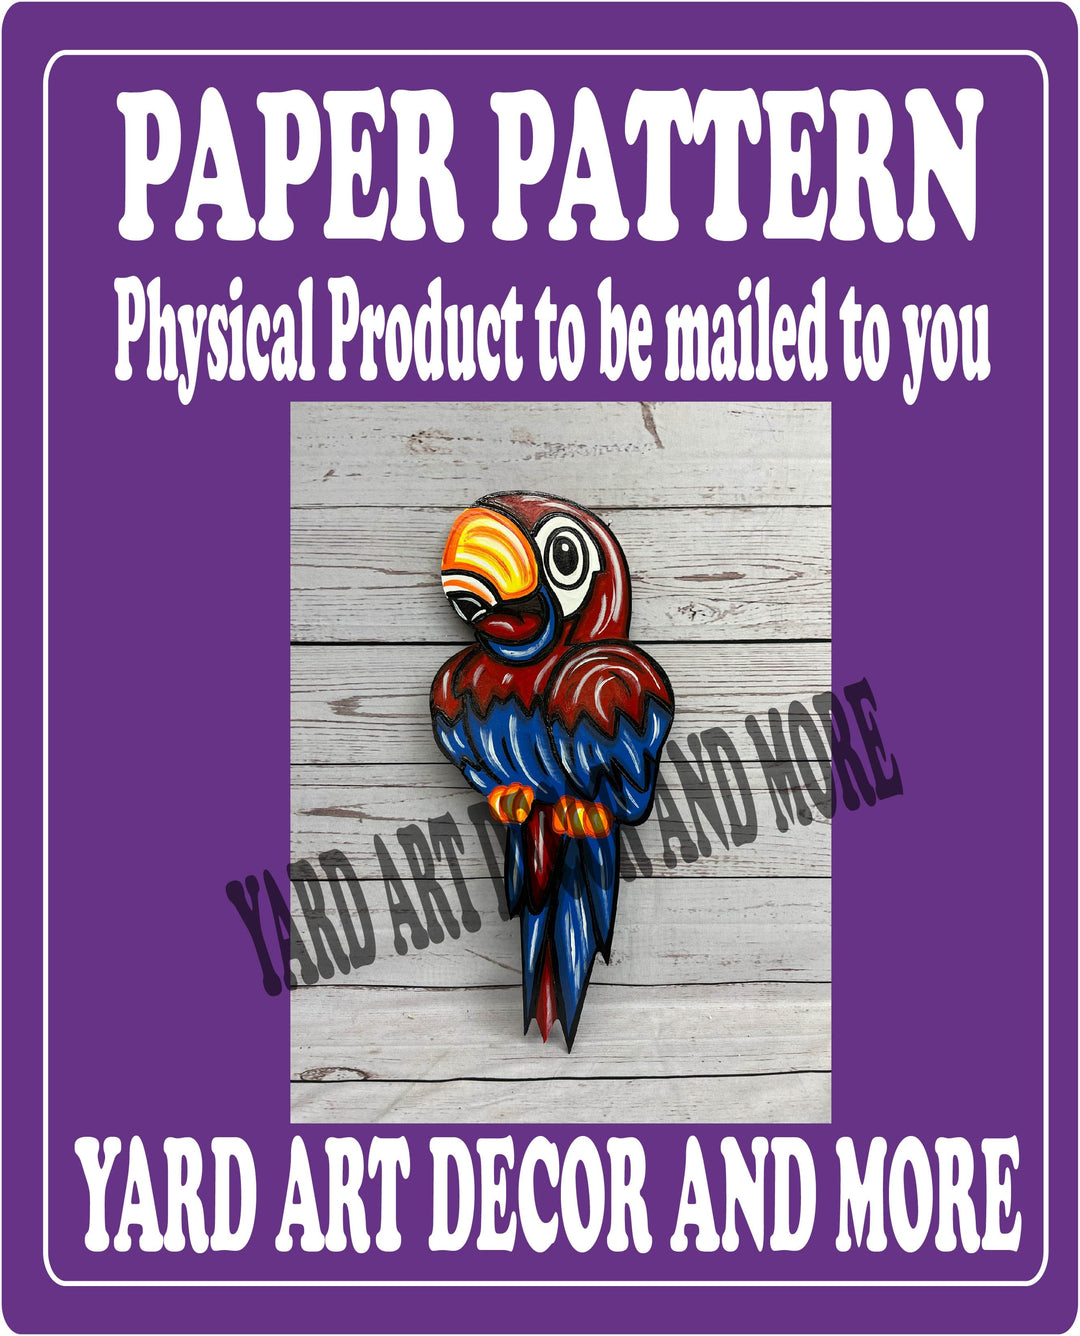 Perched Parrot yard art decoration paper pattern